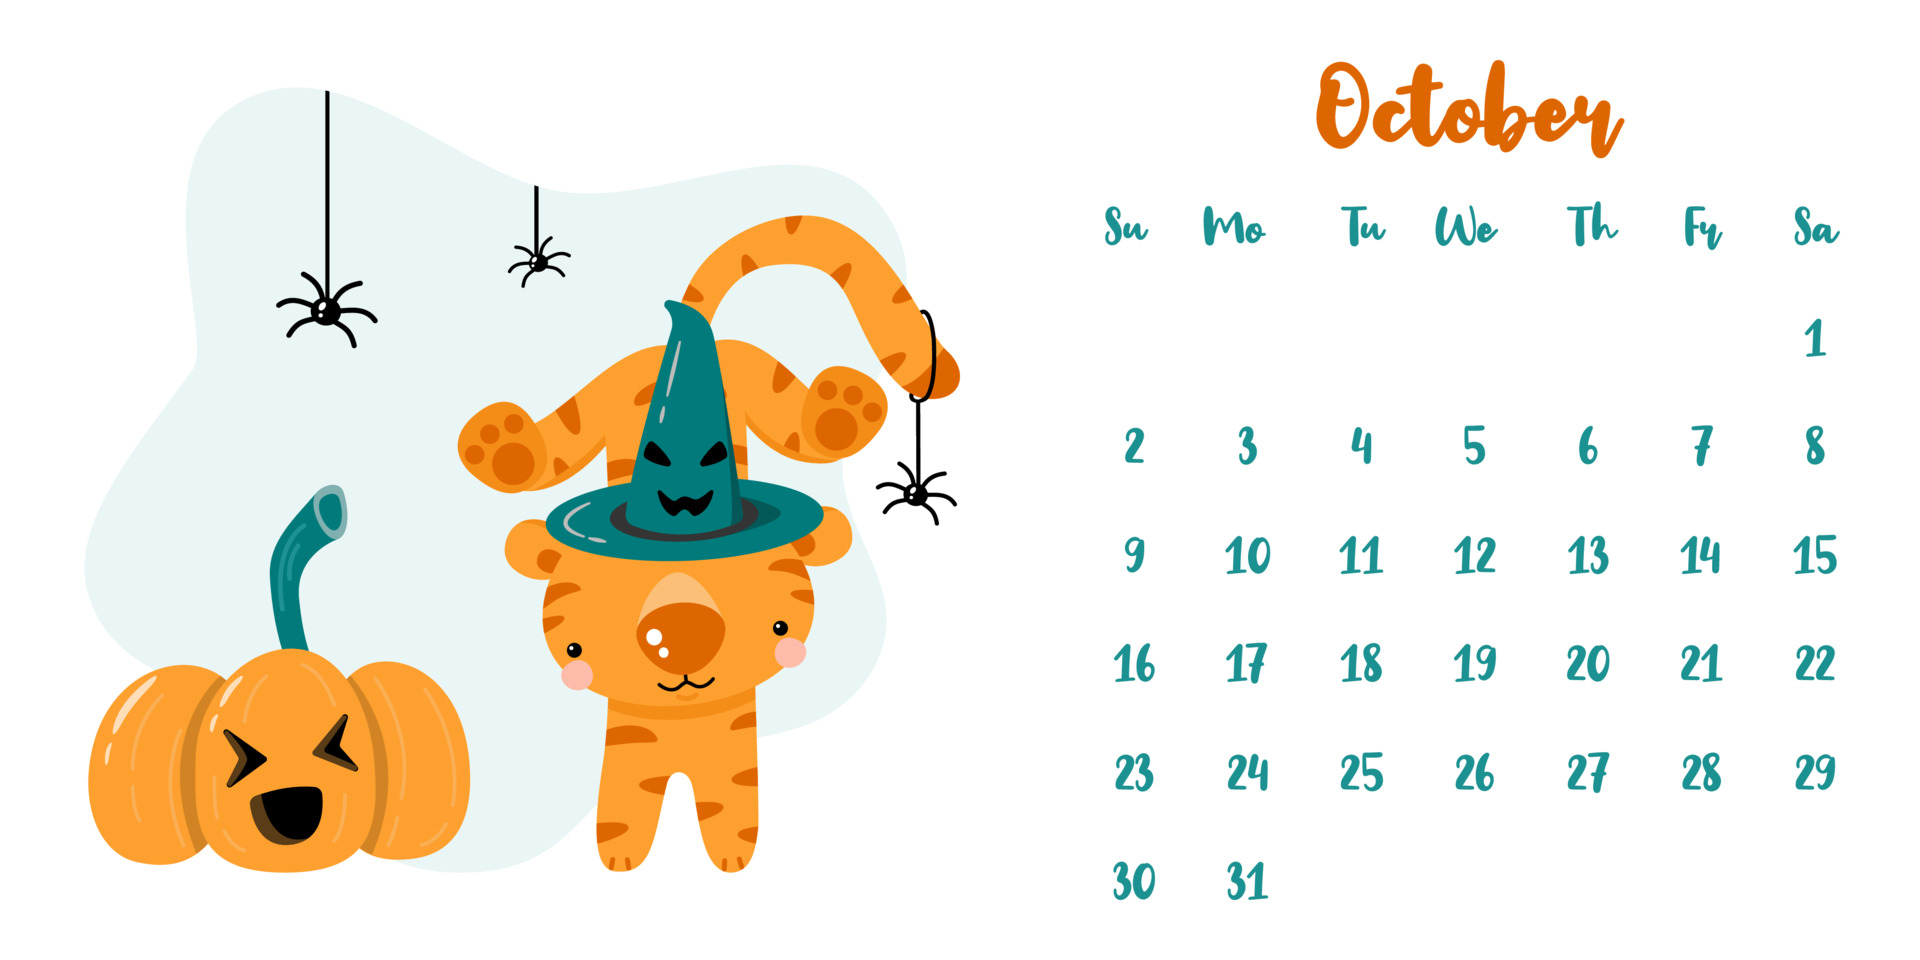 Calendar for october 2022 with cute cartoon tiger and Halloween pumpkin